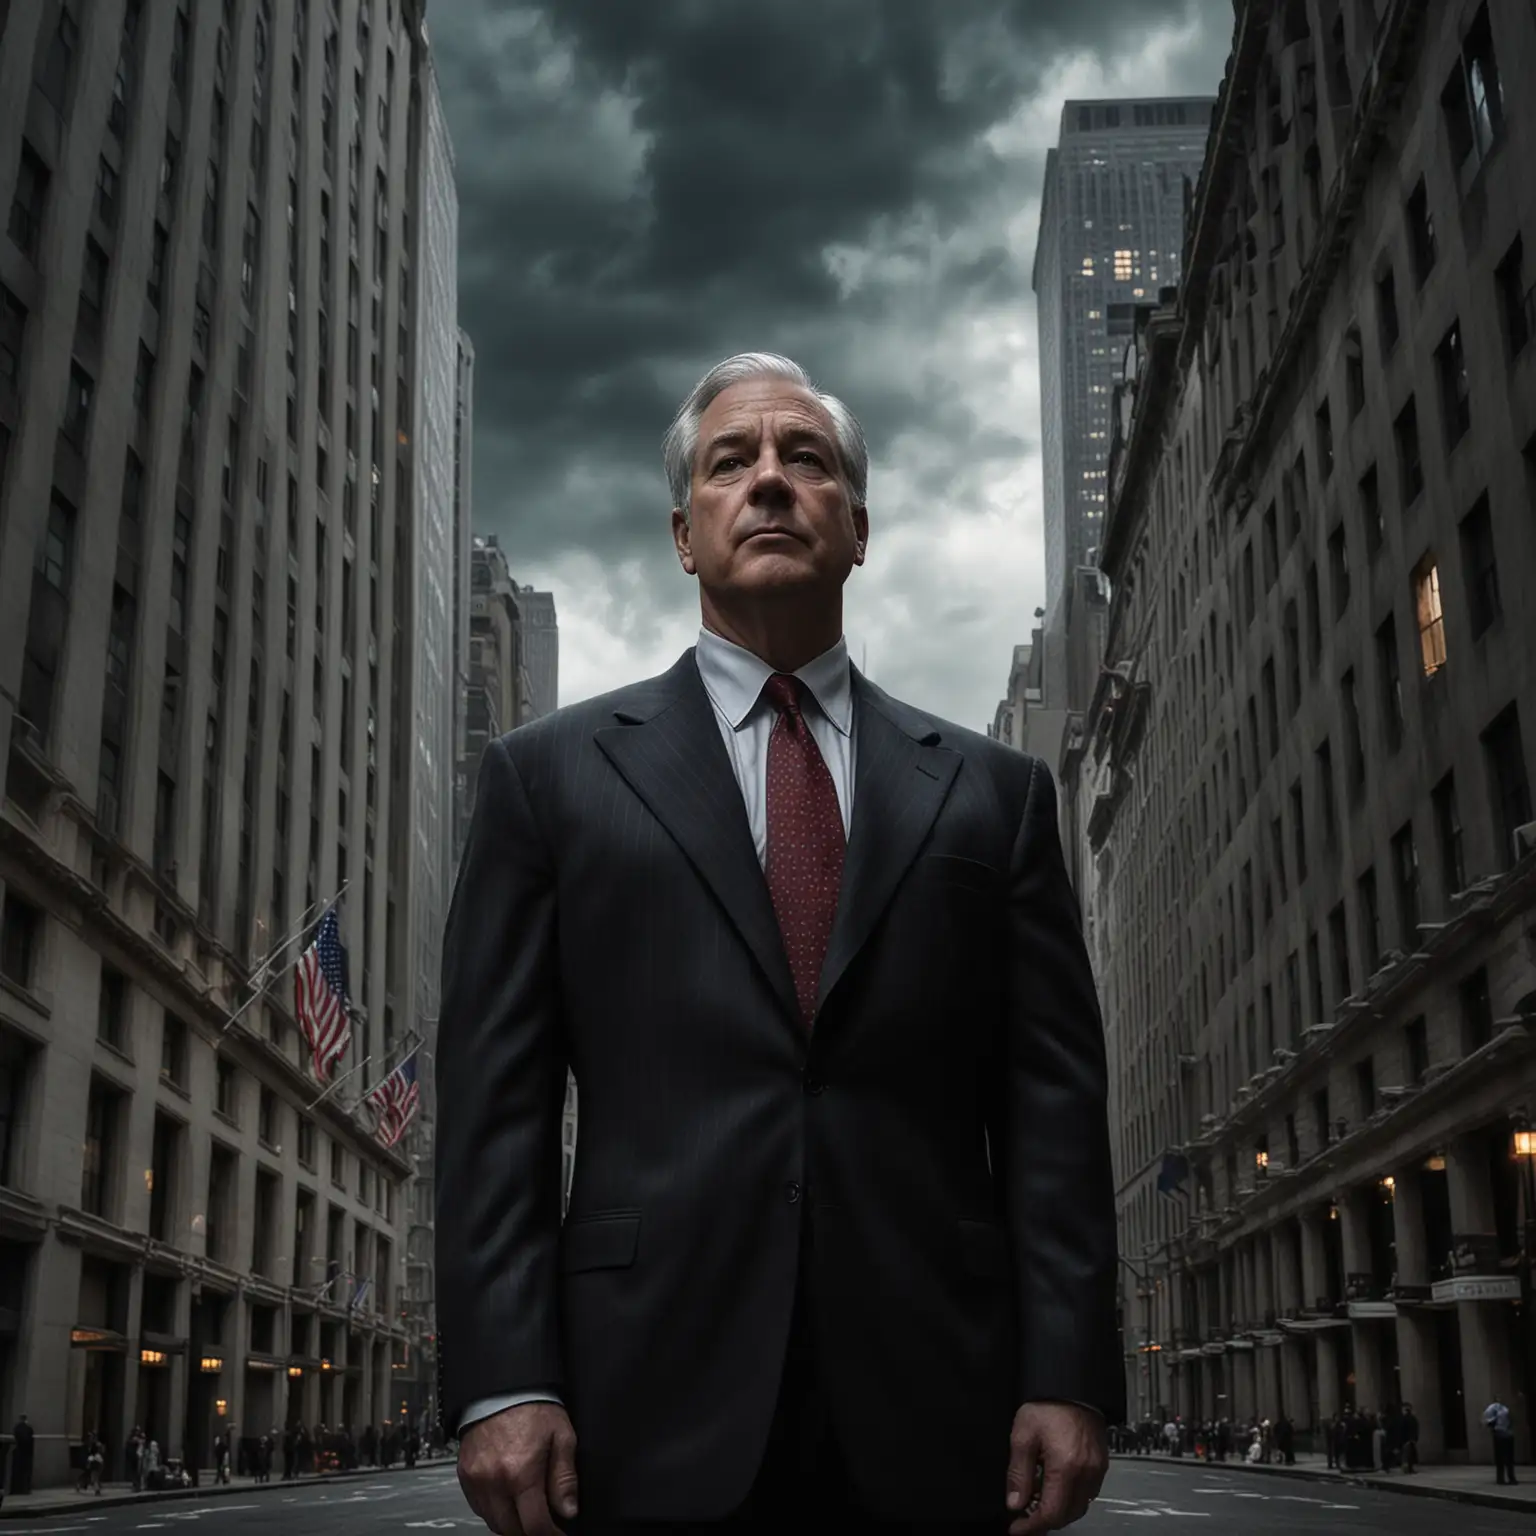 Cinematic and dramatic, realistic portrait.
Background: Dark skies, wall street buildings
Scene: JP morgan standing 